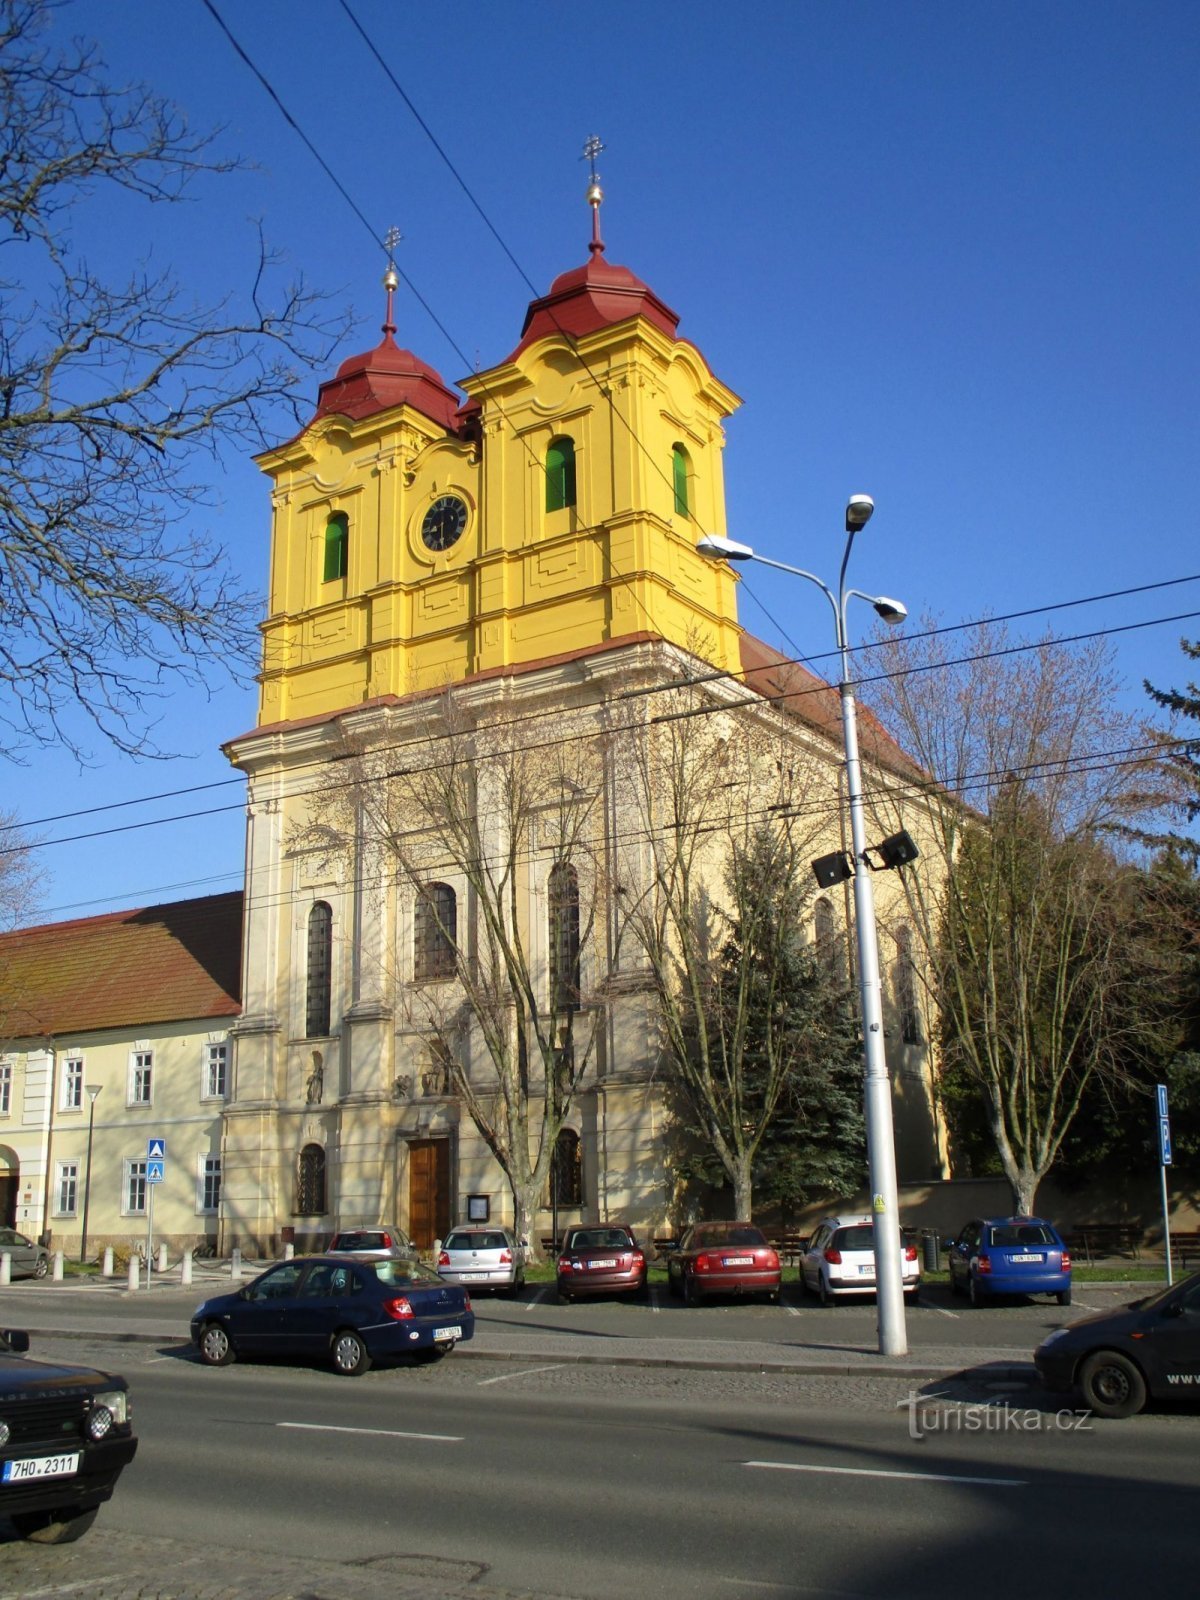 Church of St. Anny (Hradec Králové, April 5.4.2020, XNUMX)